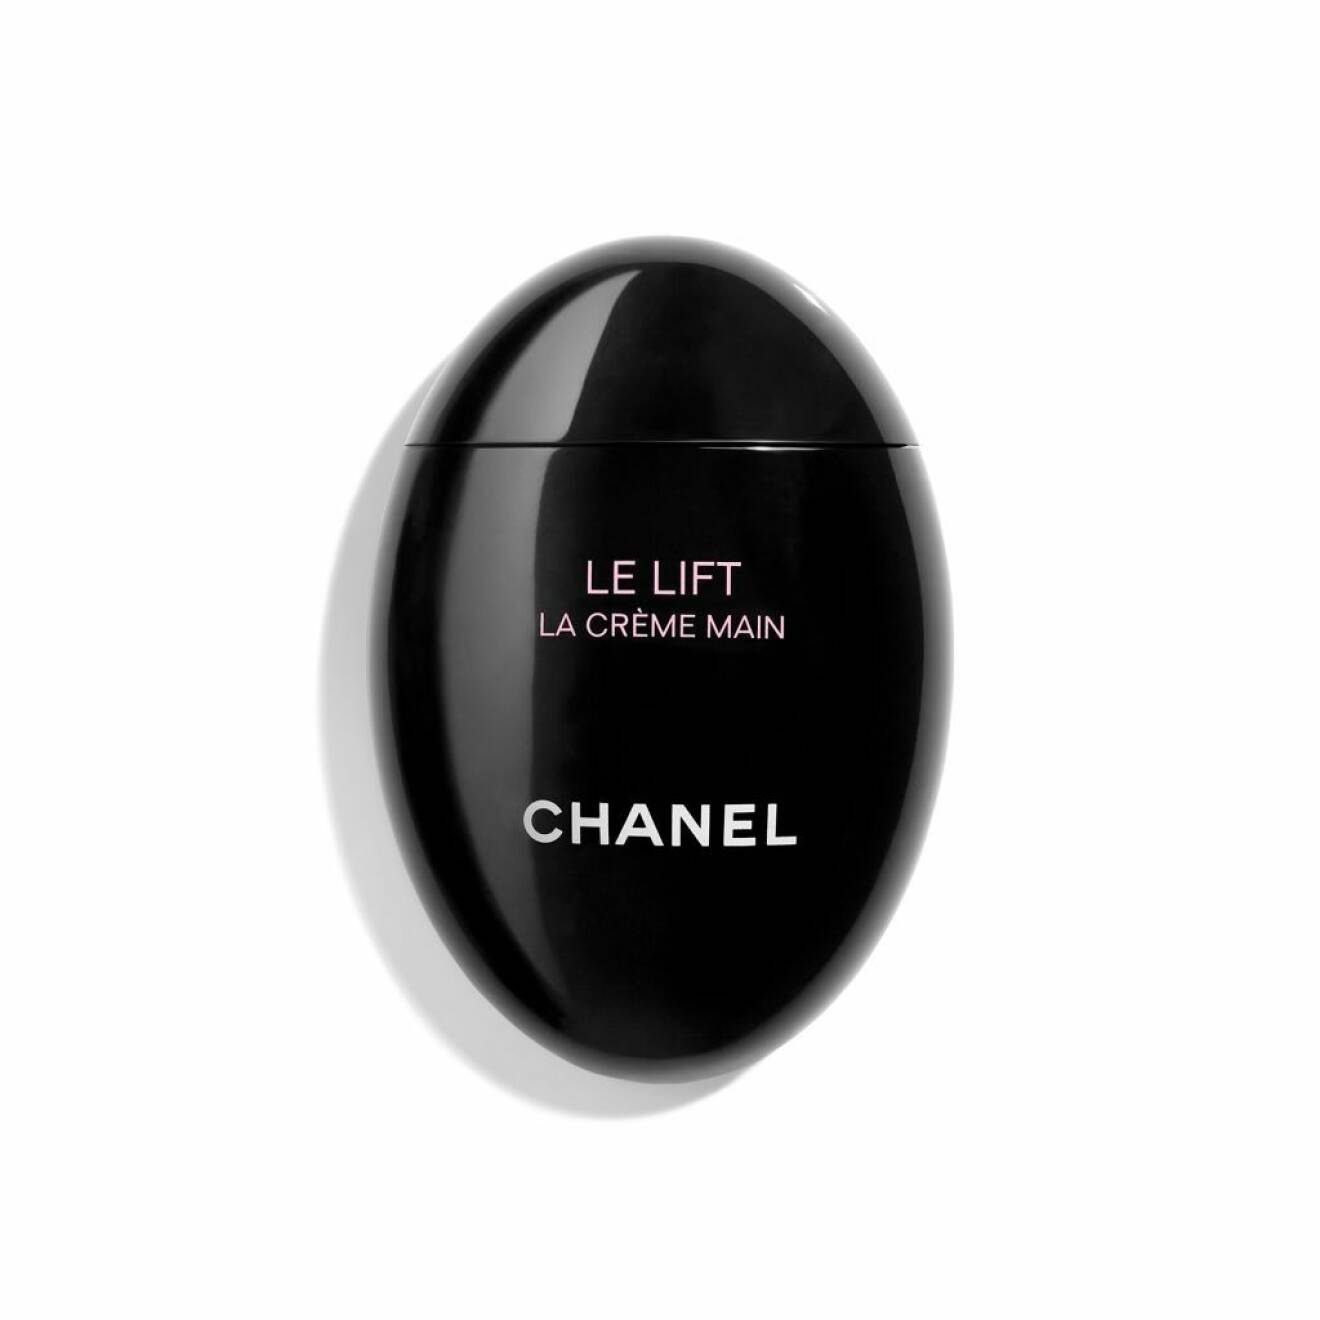 Handkrämen le crème main från Le lift serien hos Chanel.